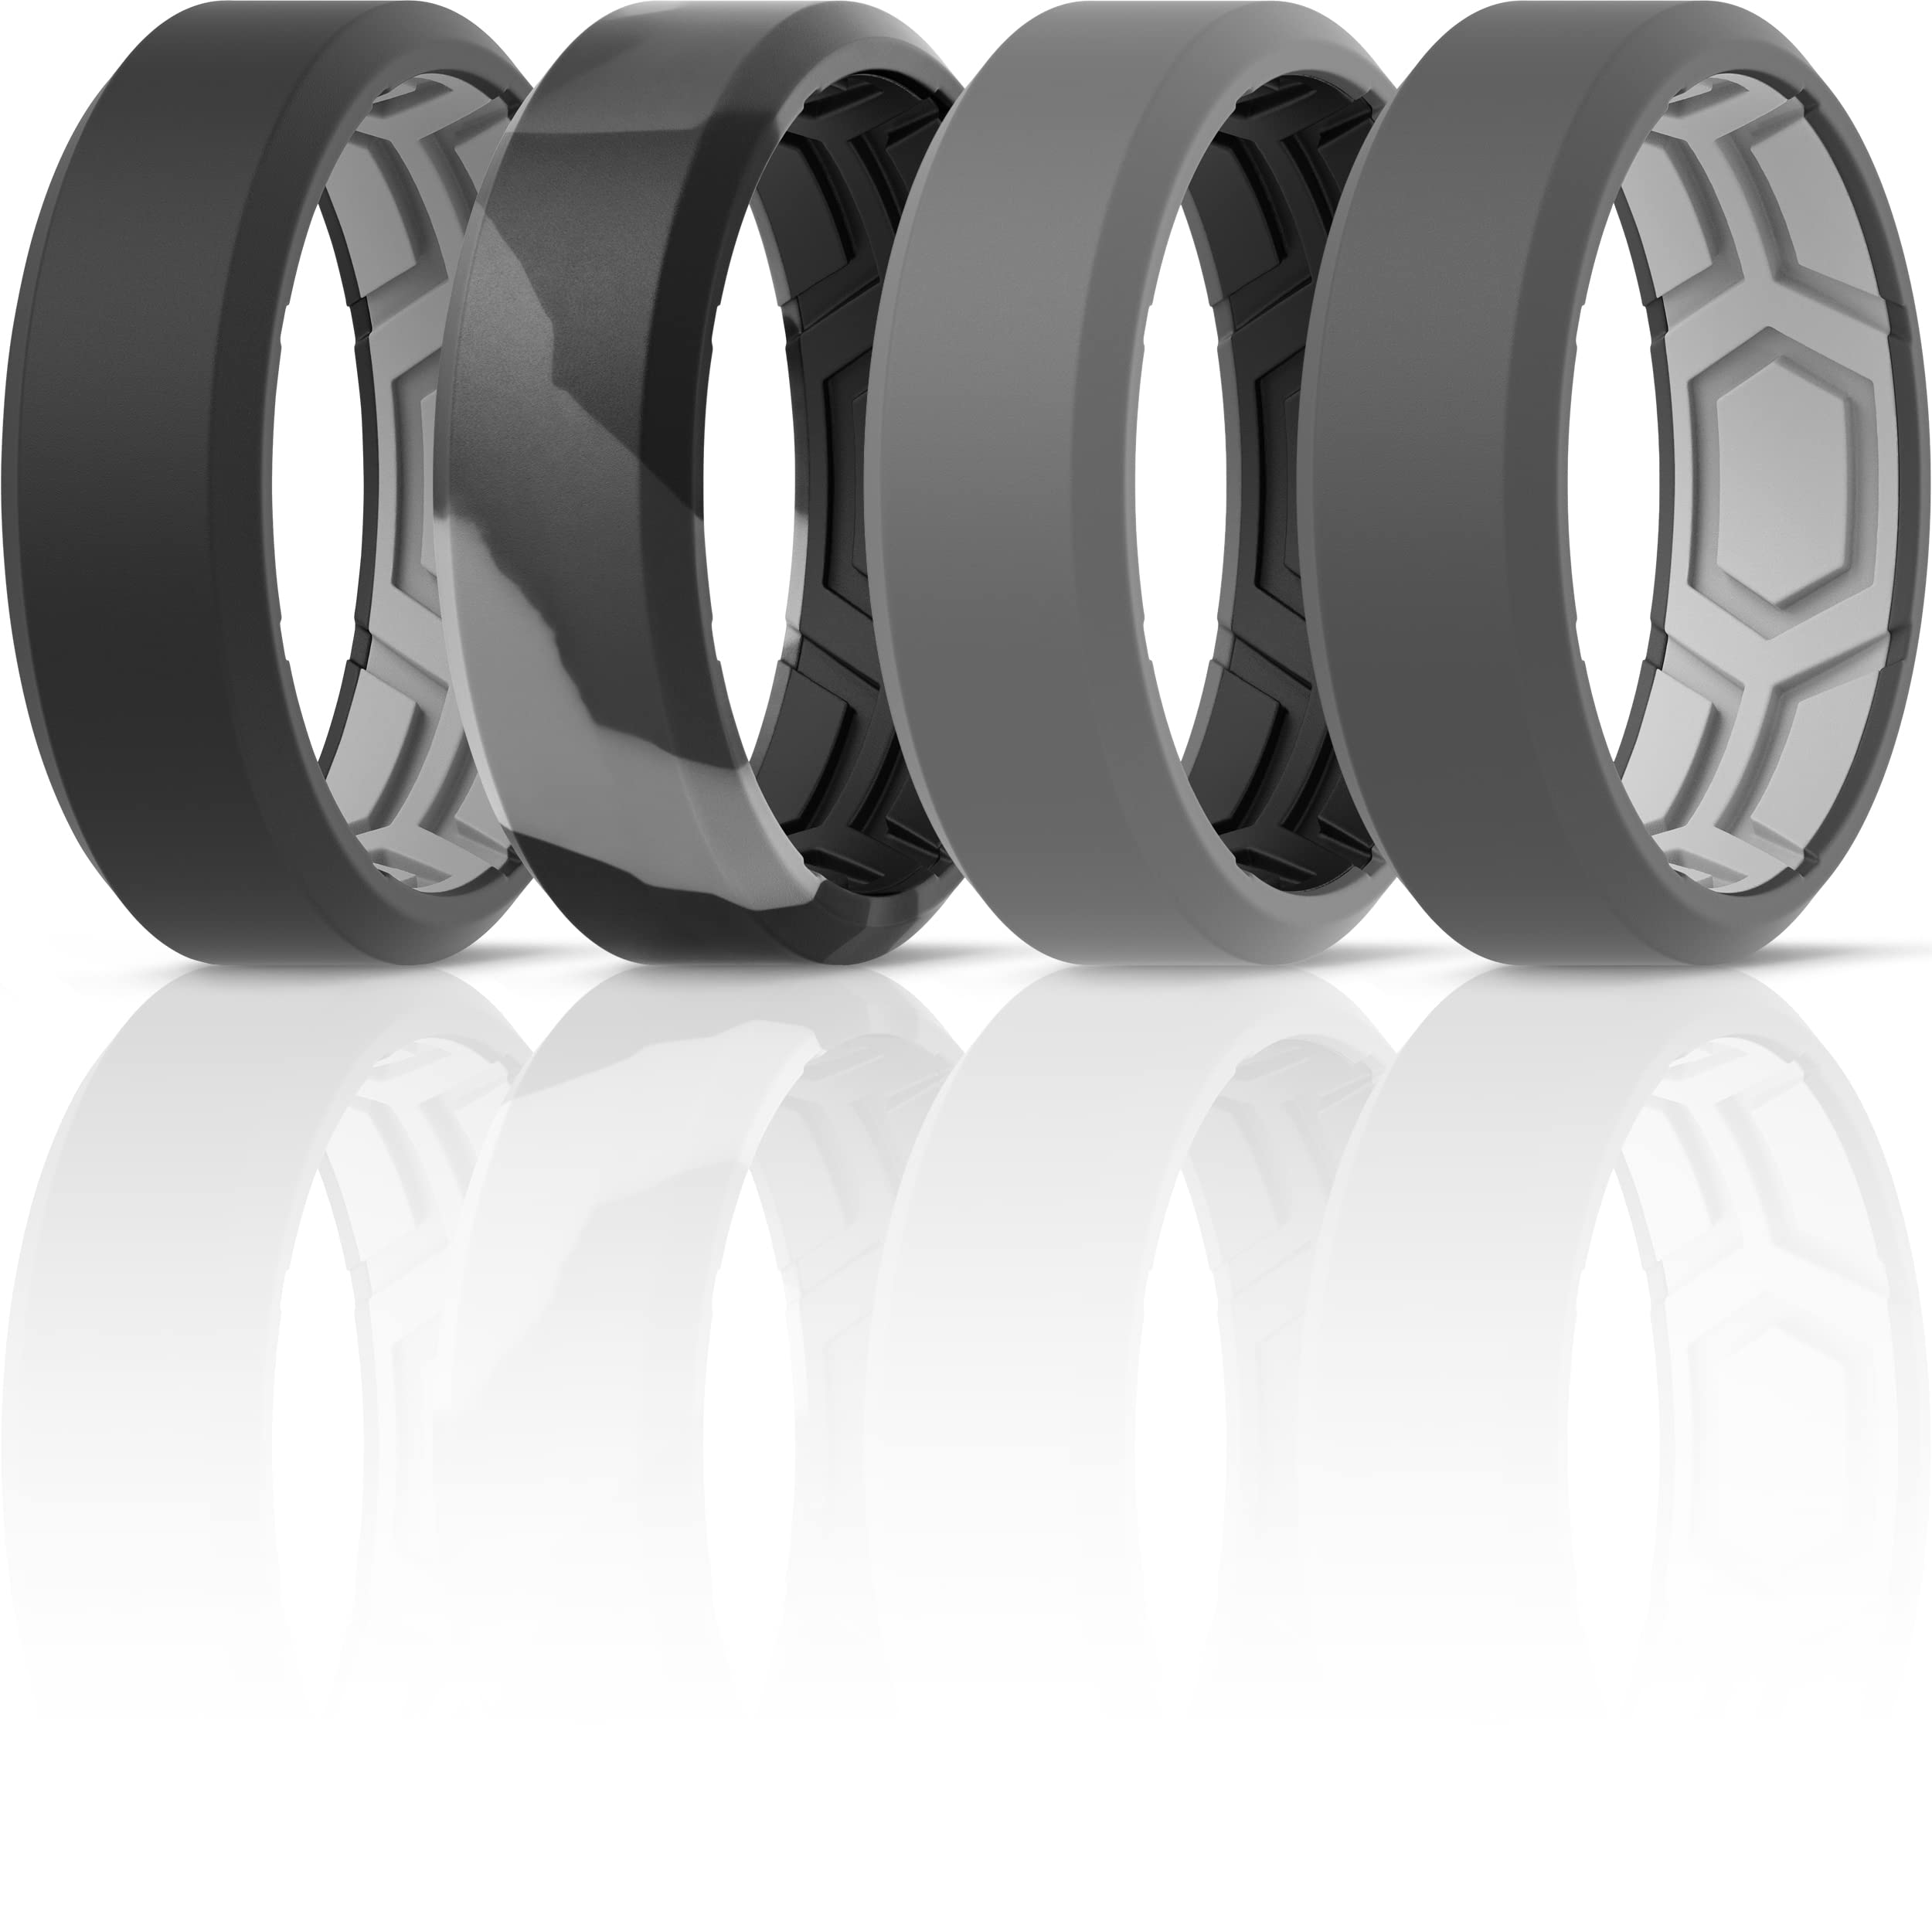 ThunderFit Men Breathable Air Grooves Silicone Wedding Ring Wedding Bands - 8mm Wide (Grey B-Light Grey A, Grey A-Black, Black-G